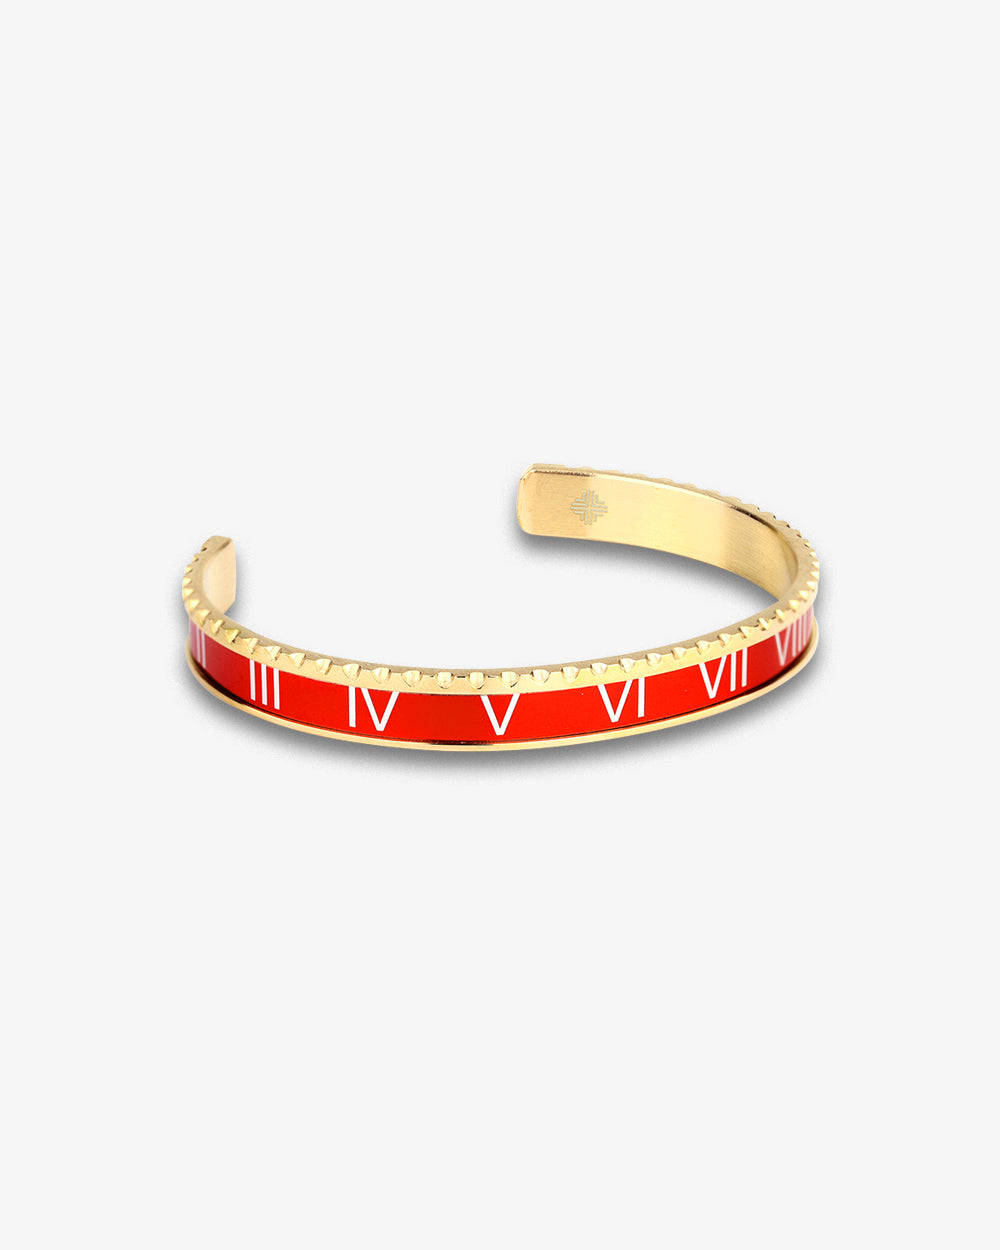 Swiss Concept Classic Roman Numeral Speed Bracelet (Red & Yellow Gold) - 18 Karat Finish